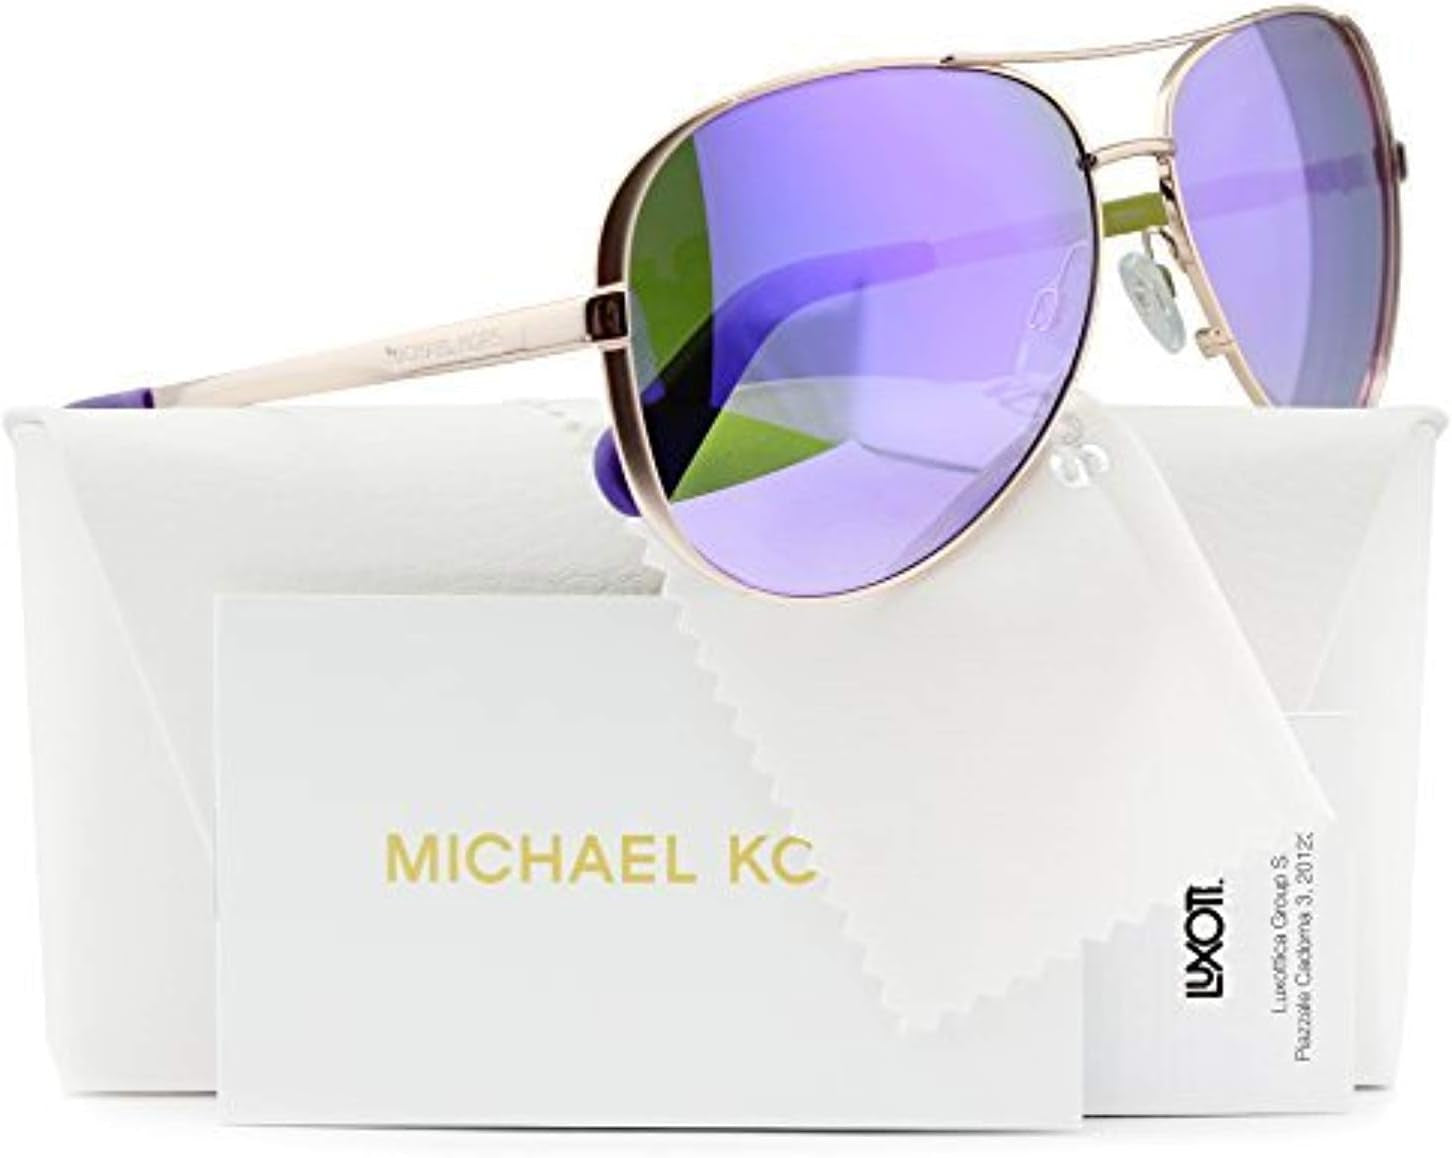 MK5004 Chelsea Aviator Sunglasses ,Womens,Rose Gold W/Purple Mirror (1003/4V) MK 5004 10034V 59Mm Authentic